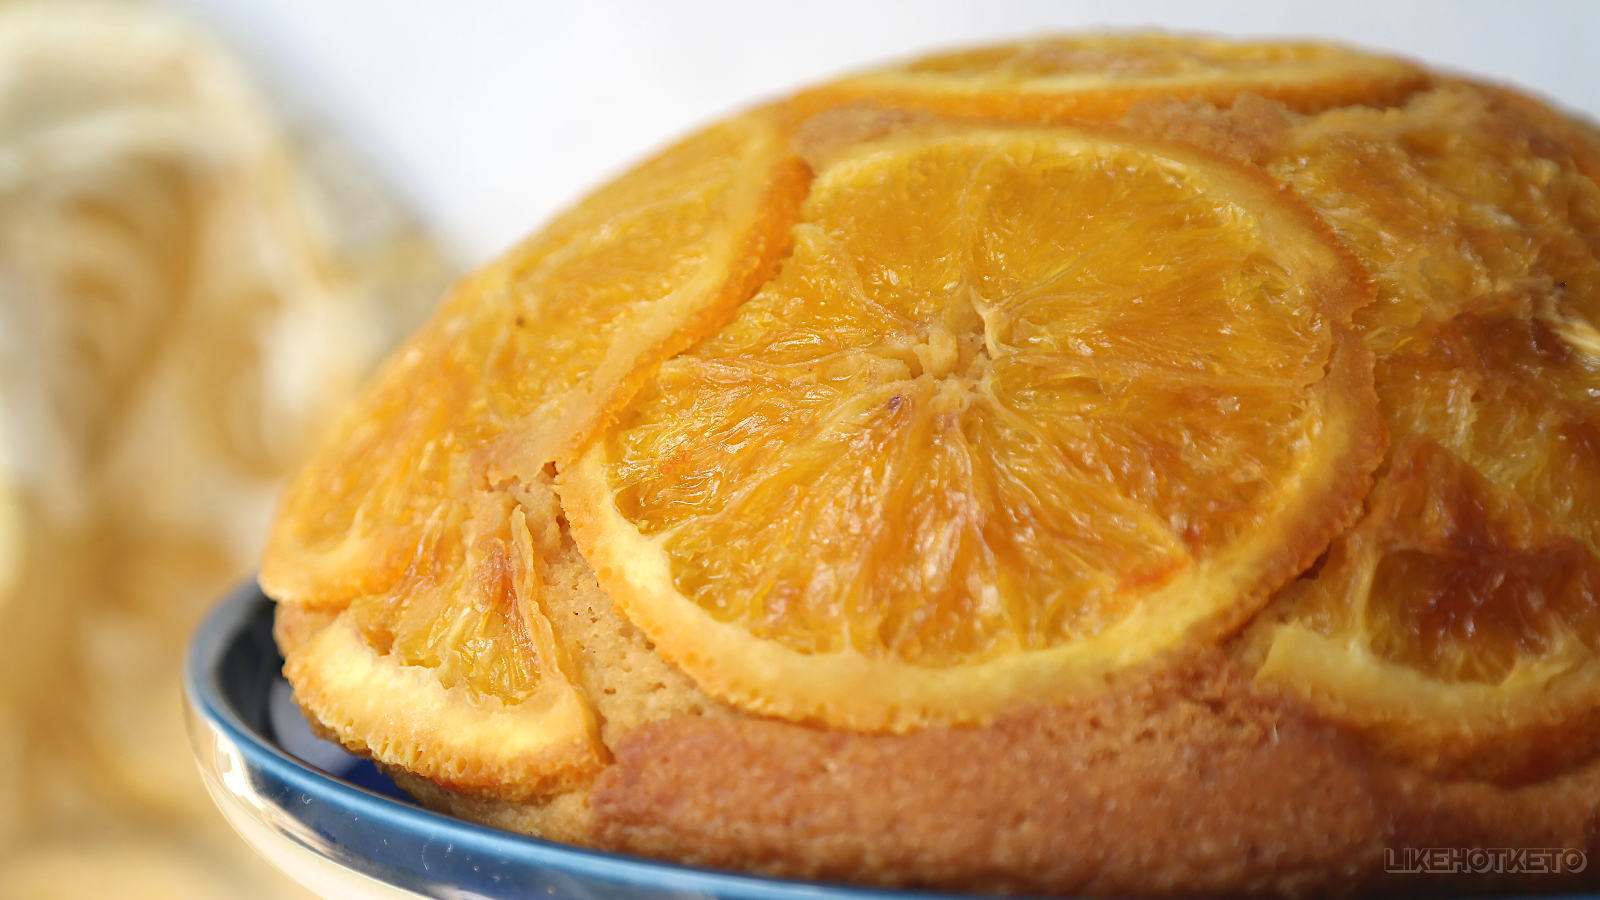 A lovely half hemisphere shaped gluten-free cake covered in golden orange slices.